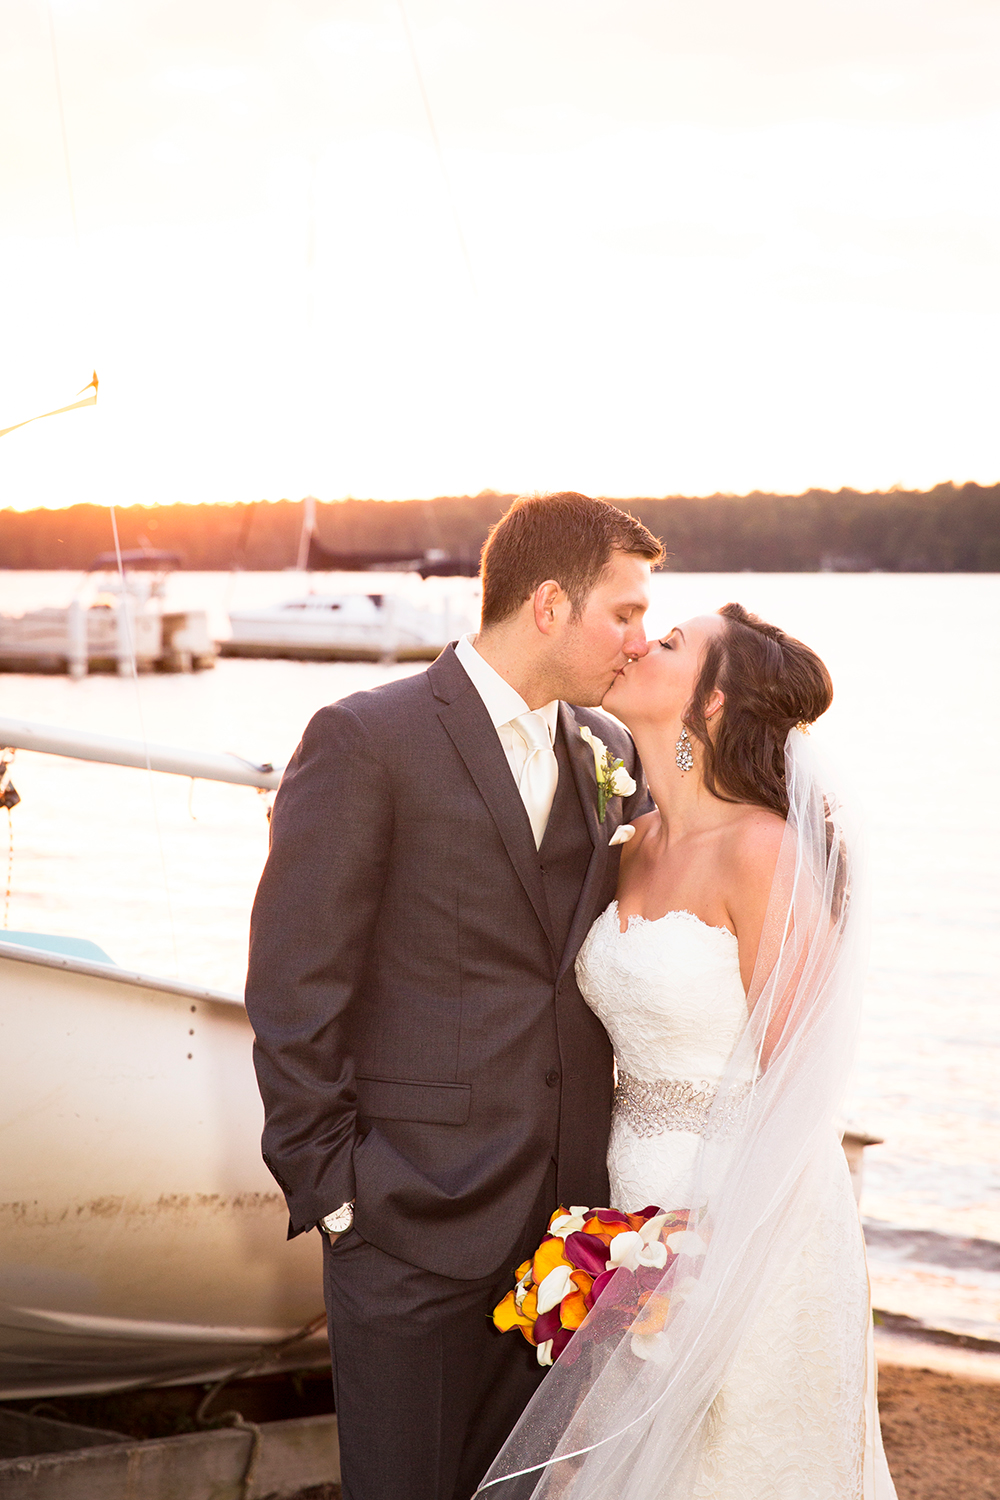 Jenna  Davids Fall Wedding at The Boathouse - Image Property of www.j-dphoto.com